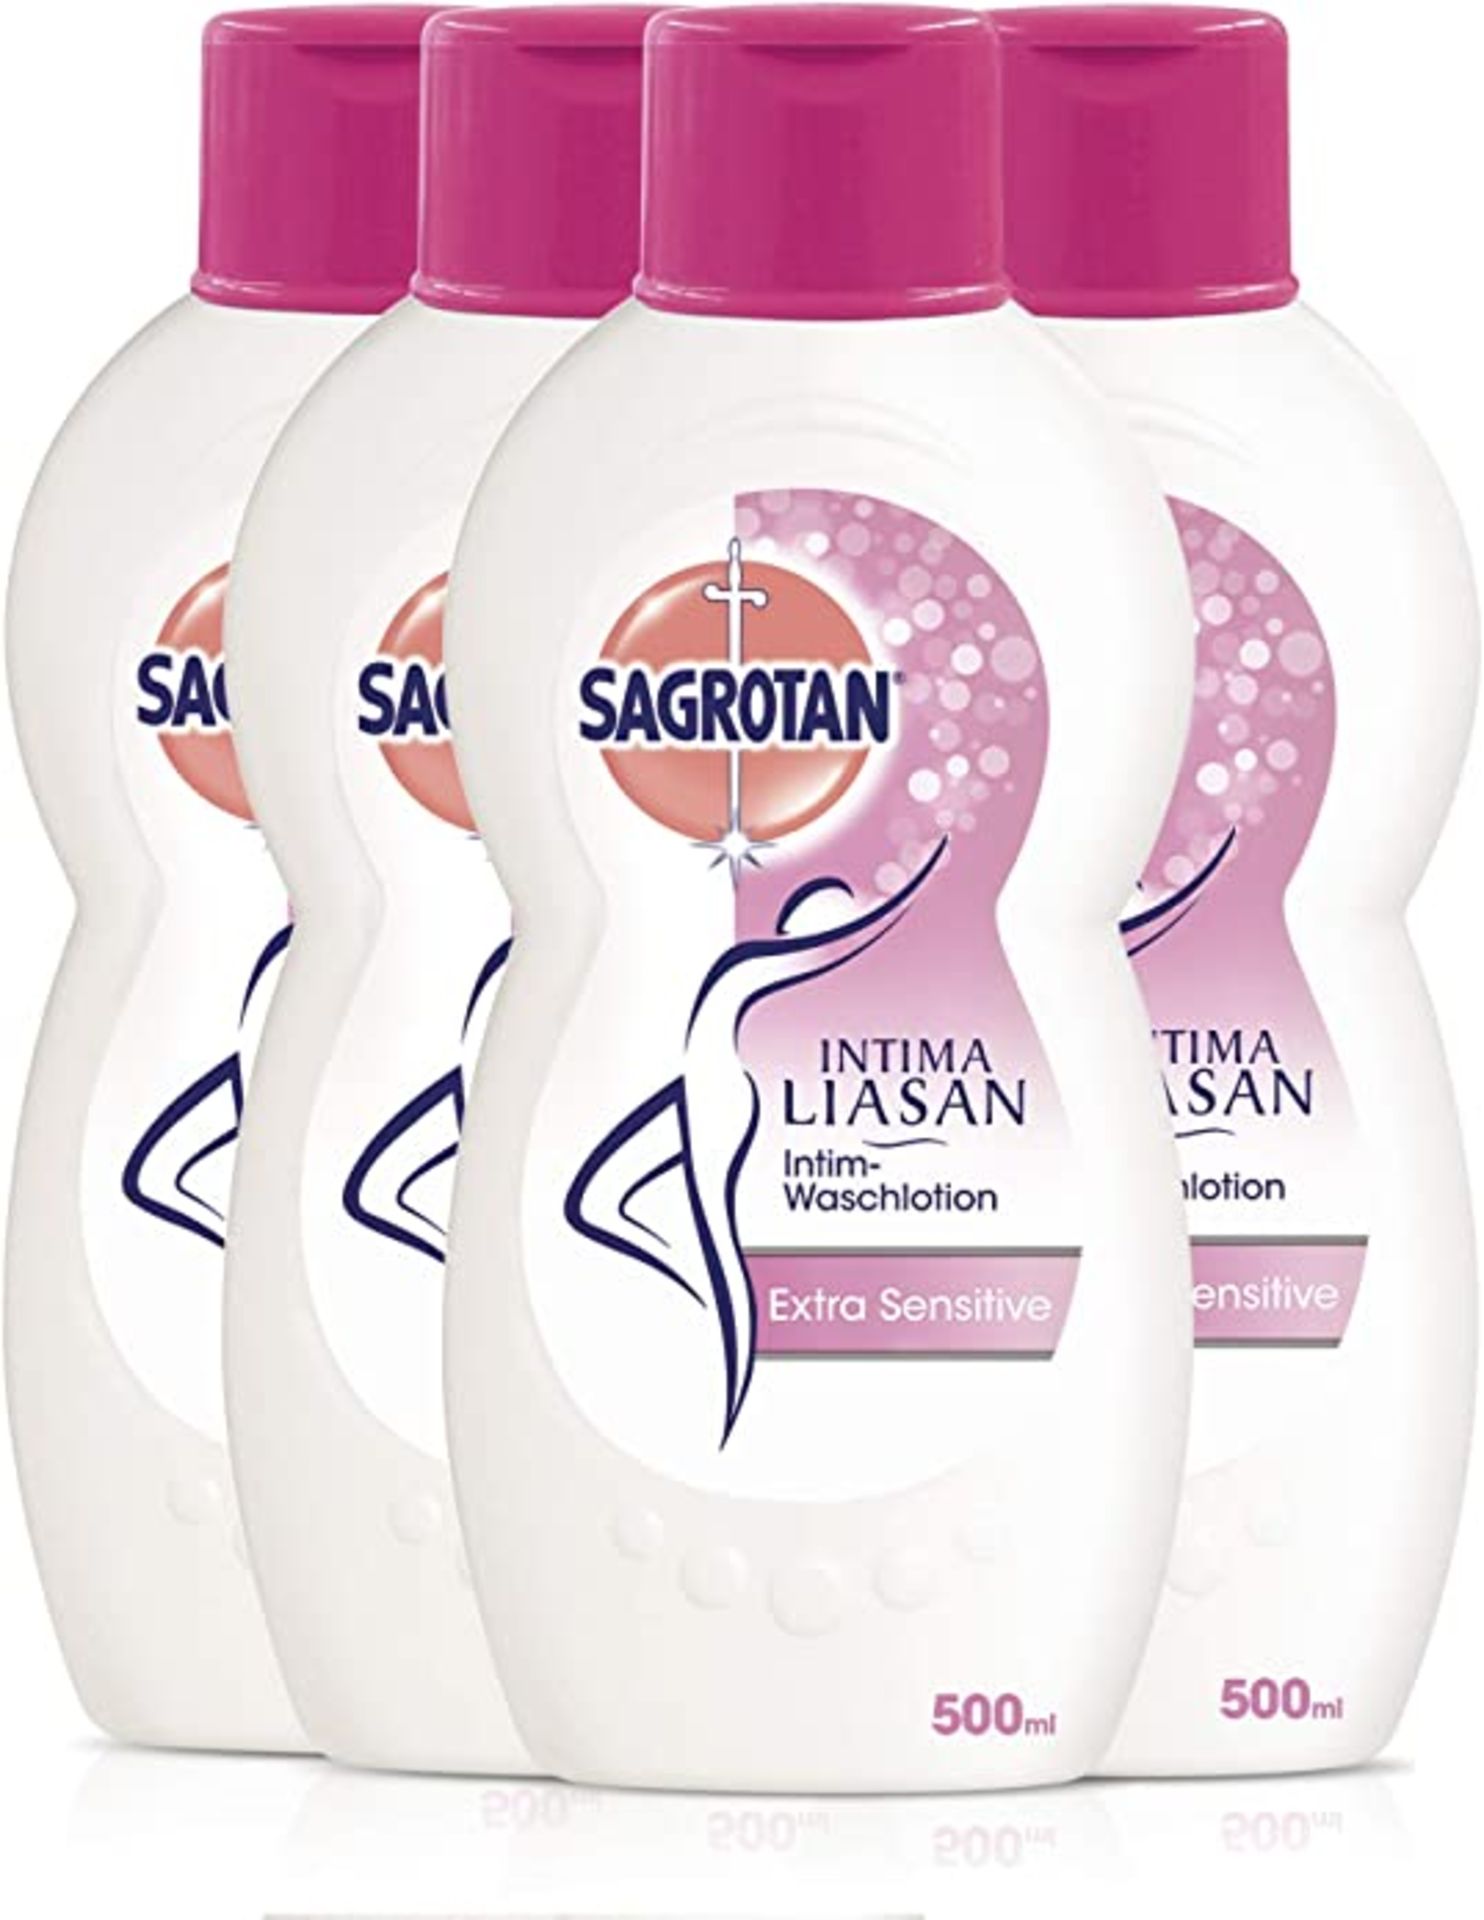 RRP-£12 Intima Liasan by Sagrotan Intim-Waschlotion Extra Sensitive â€“ Milde Intim-Pflege fÃ¼r empf